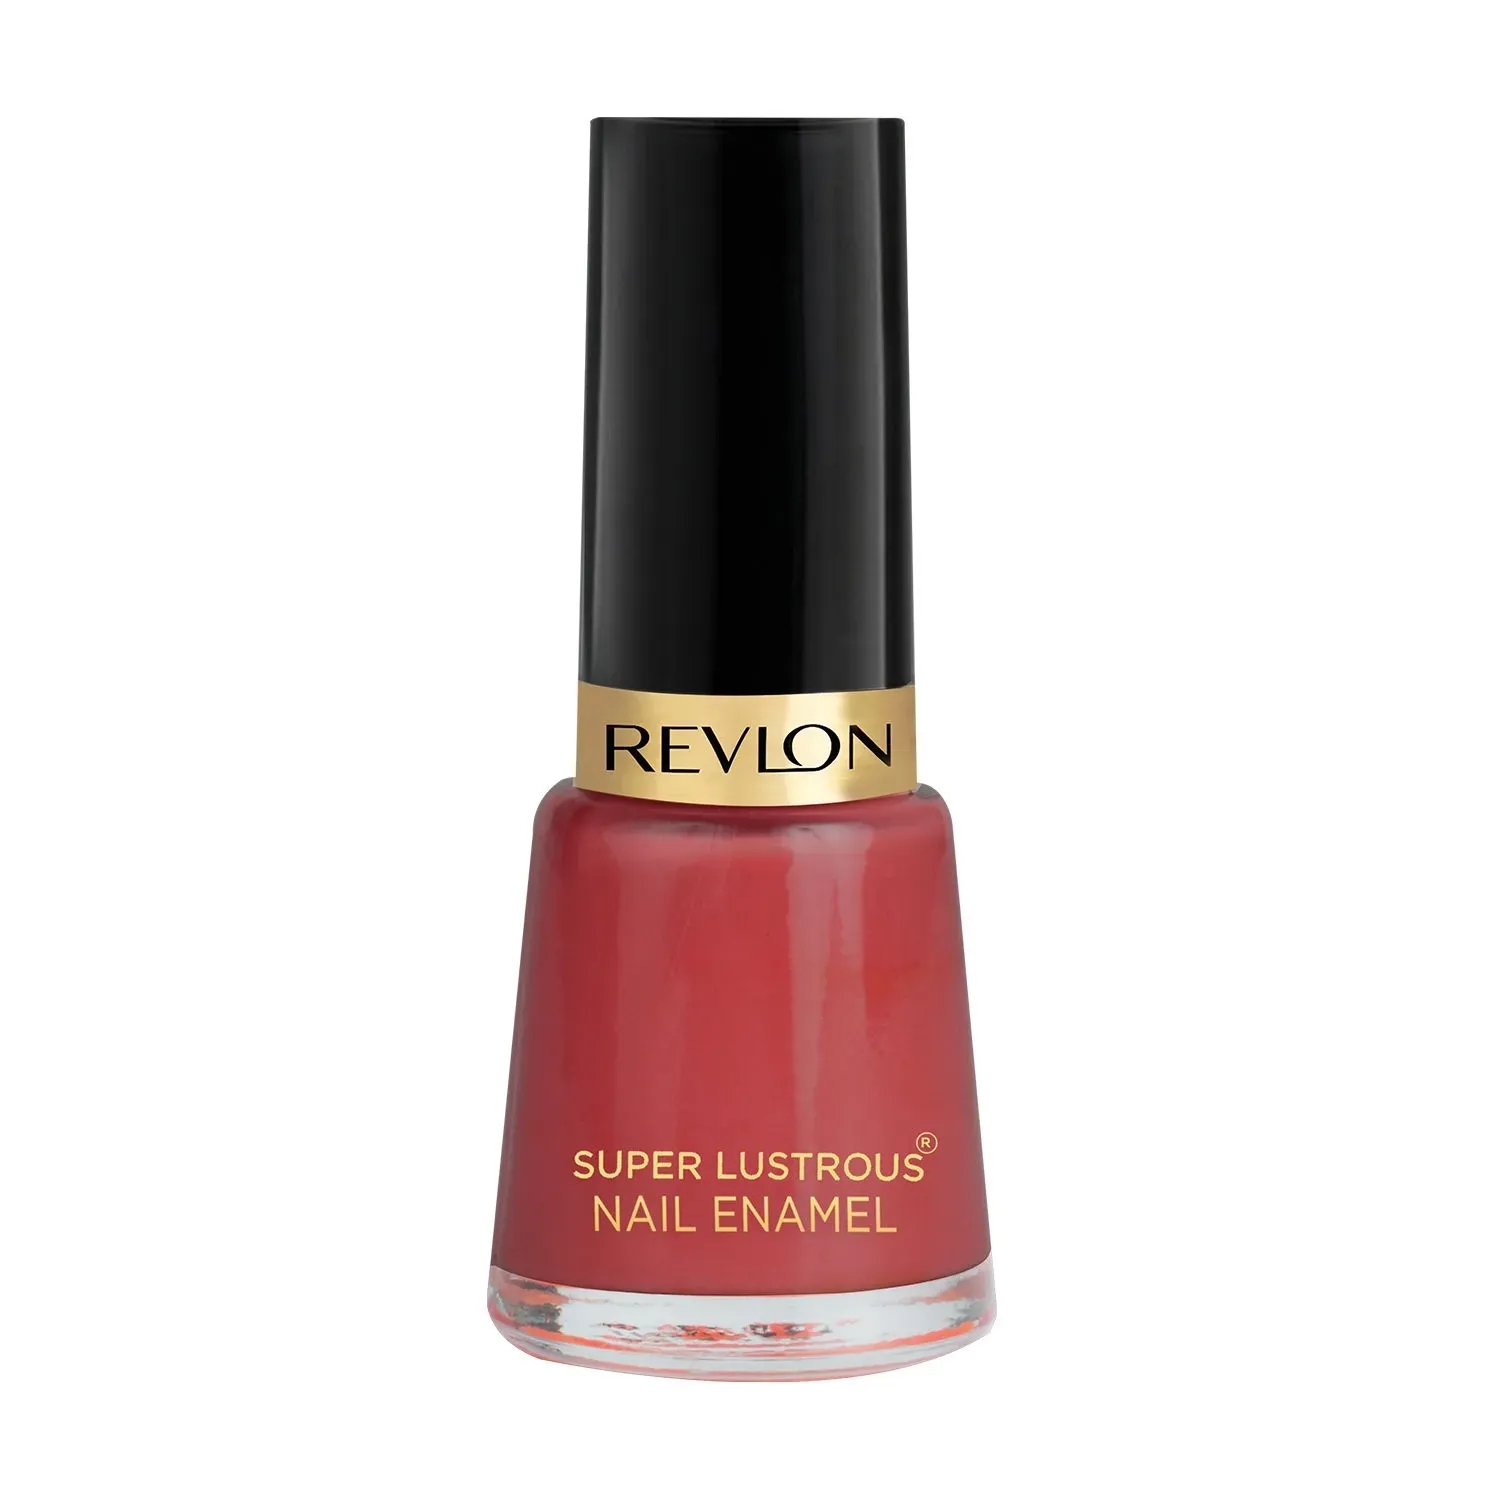 Revlon | Revlon Super Lustrous Nail Enamel - Tuscan Sun (8ml)